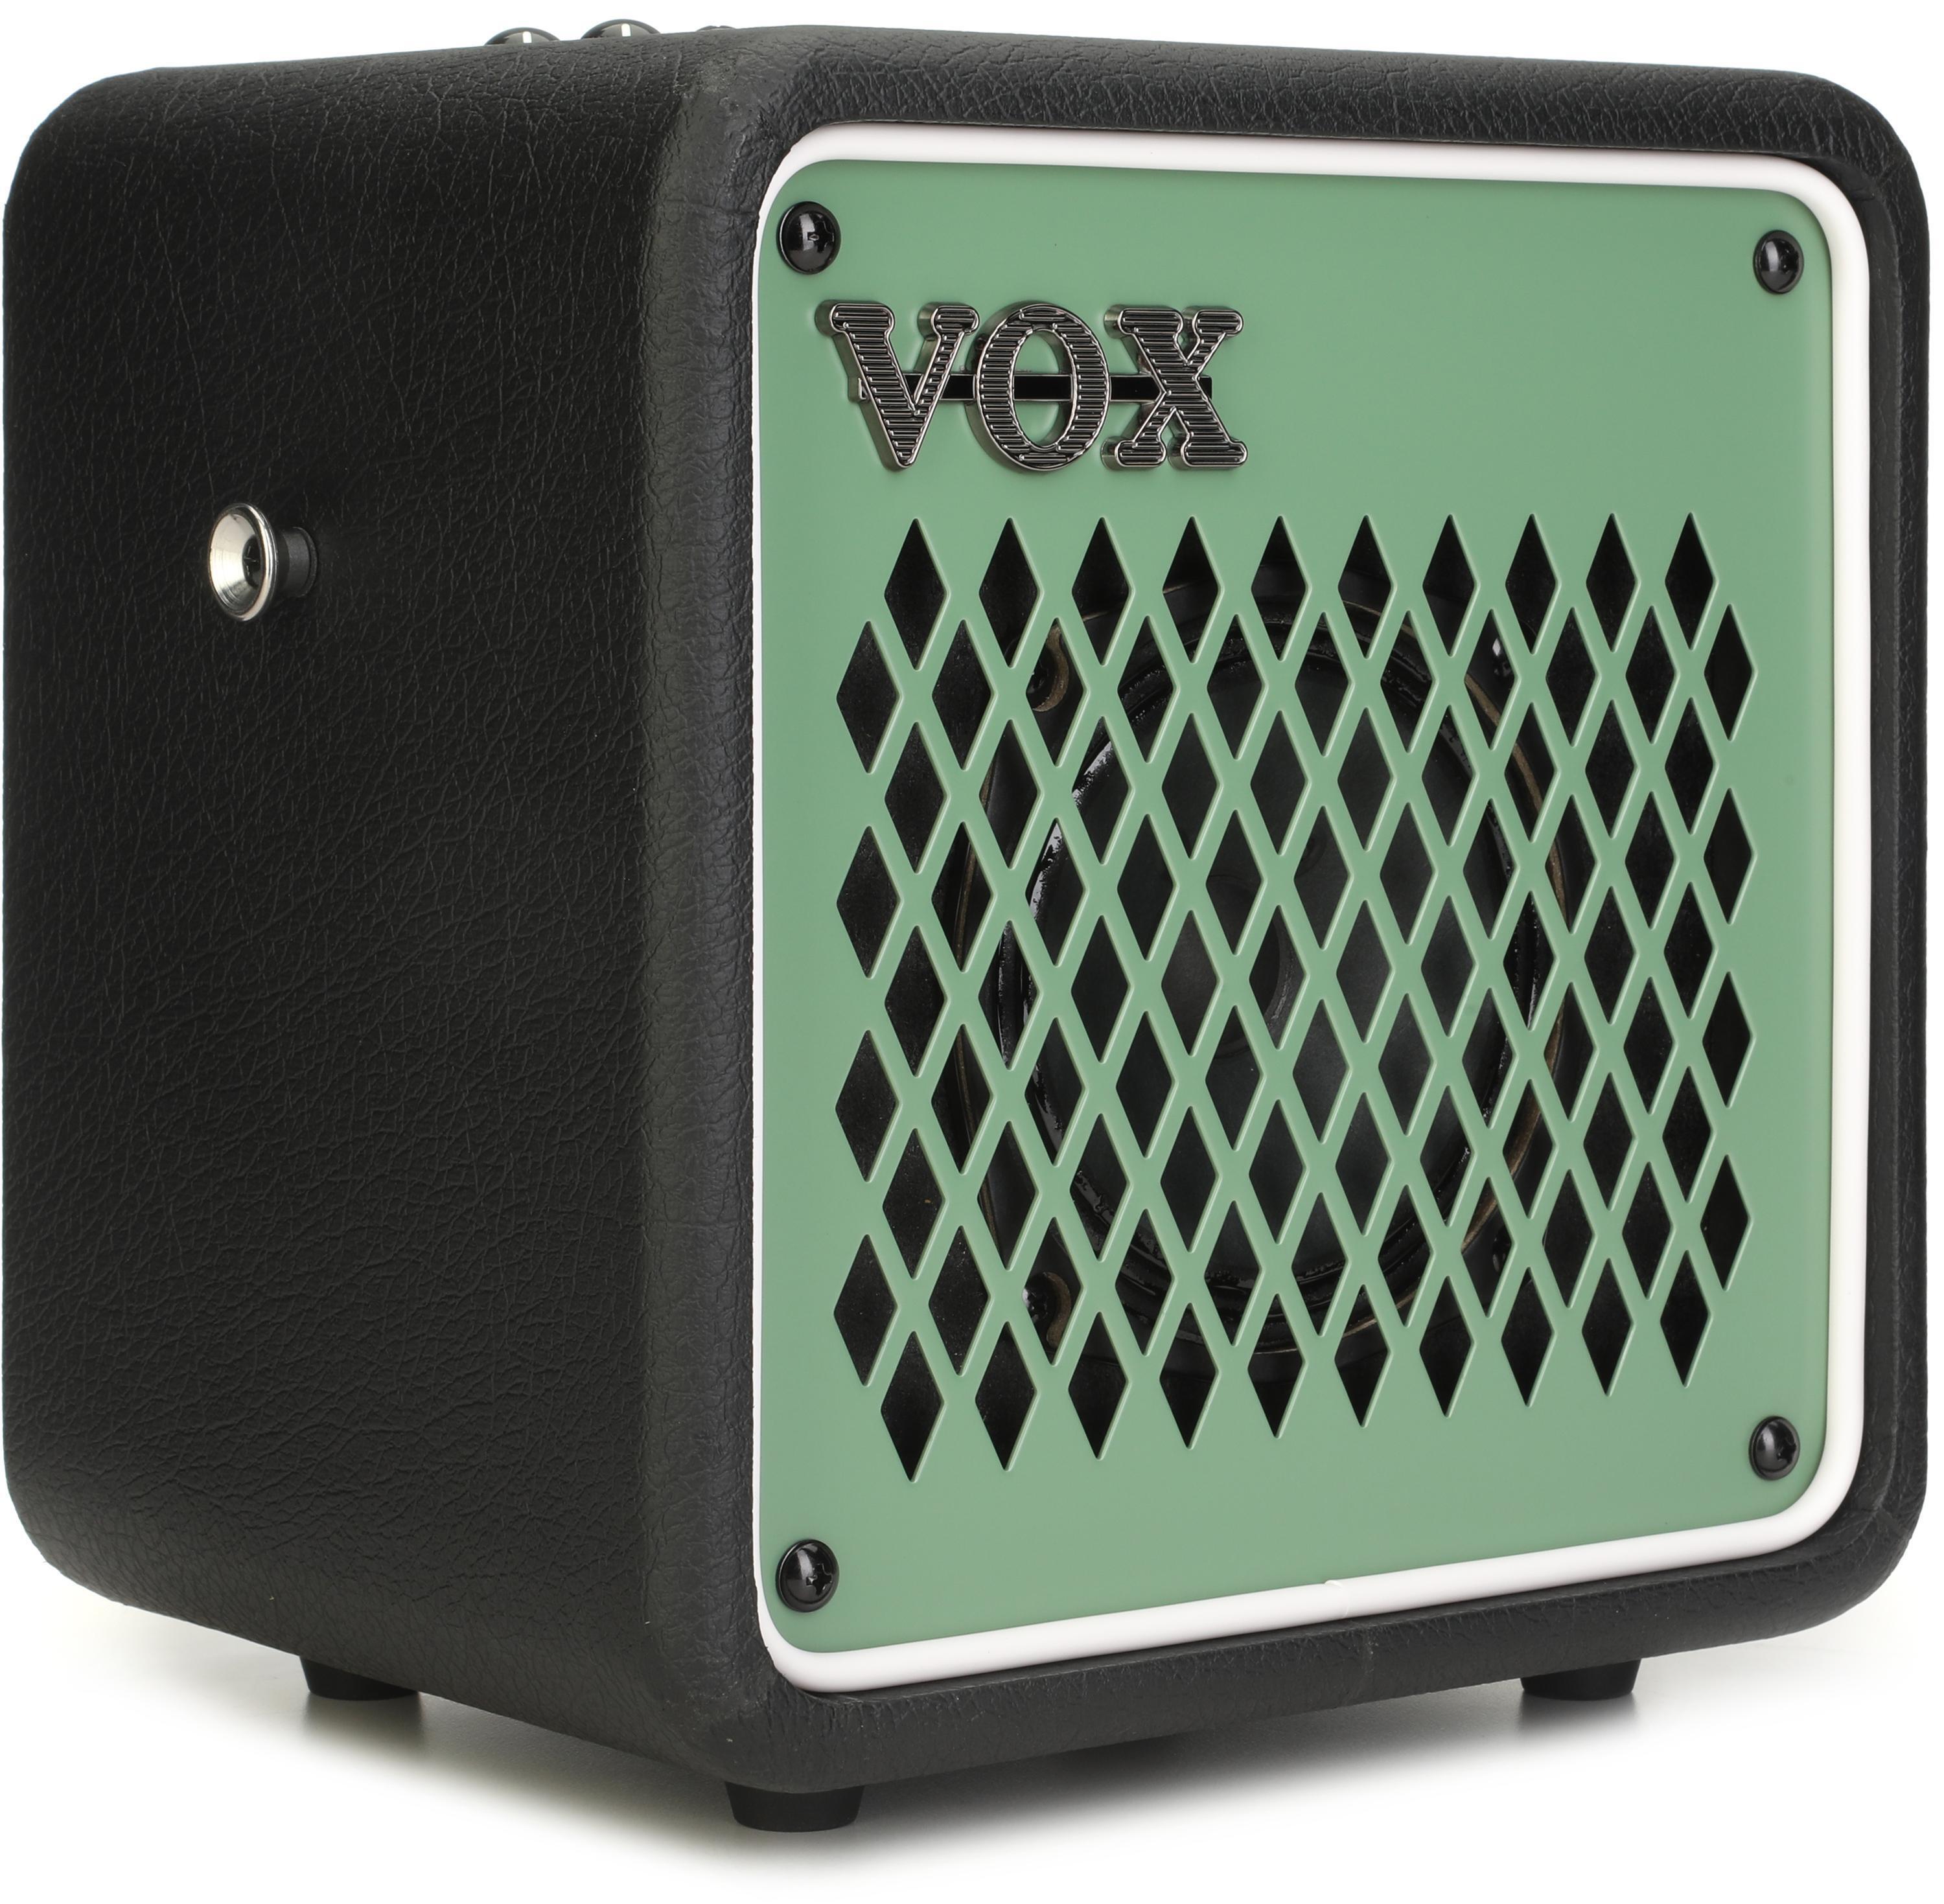 Vox Mini Go 3 3-watt Portable Modeling Amp - Green | Sweetwater